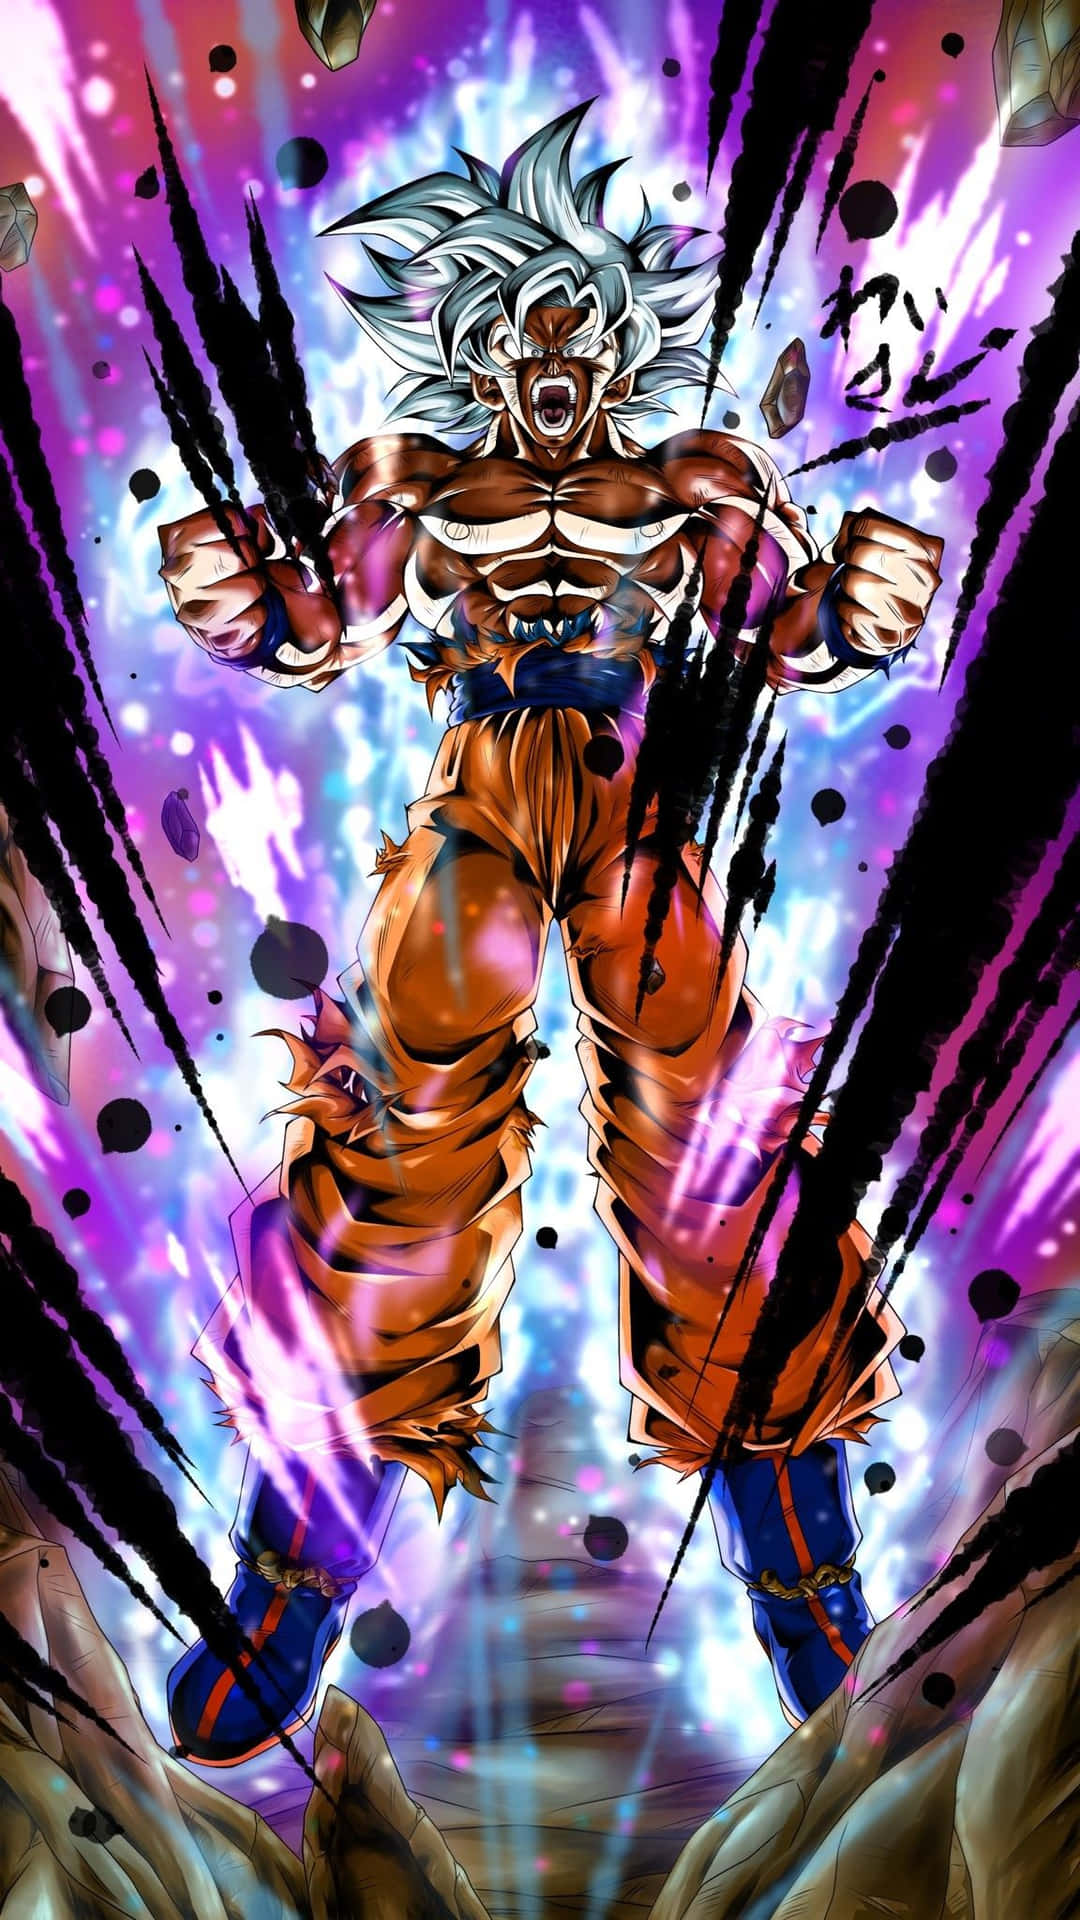 Mui Goku on Full Force* Wallpaper